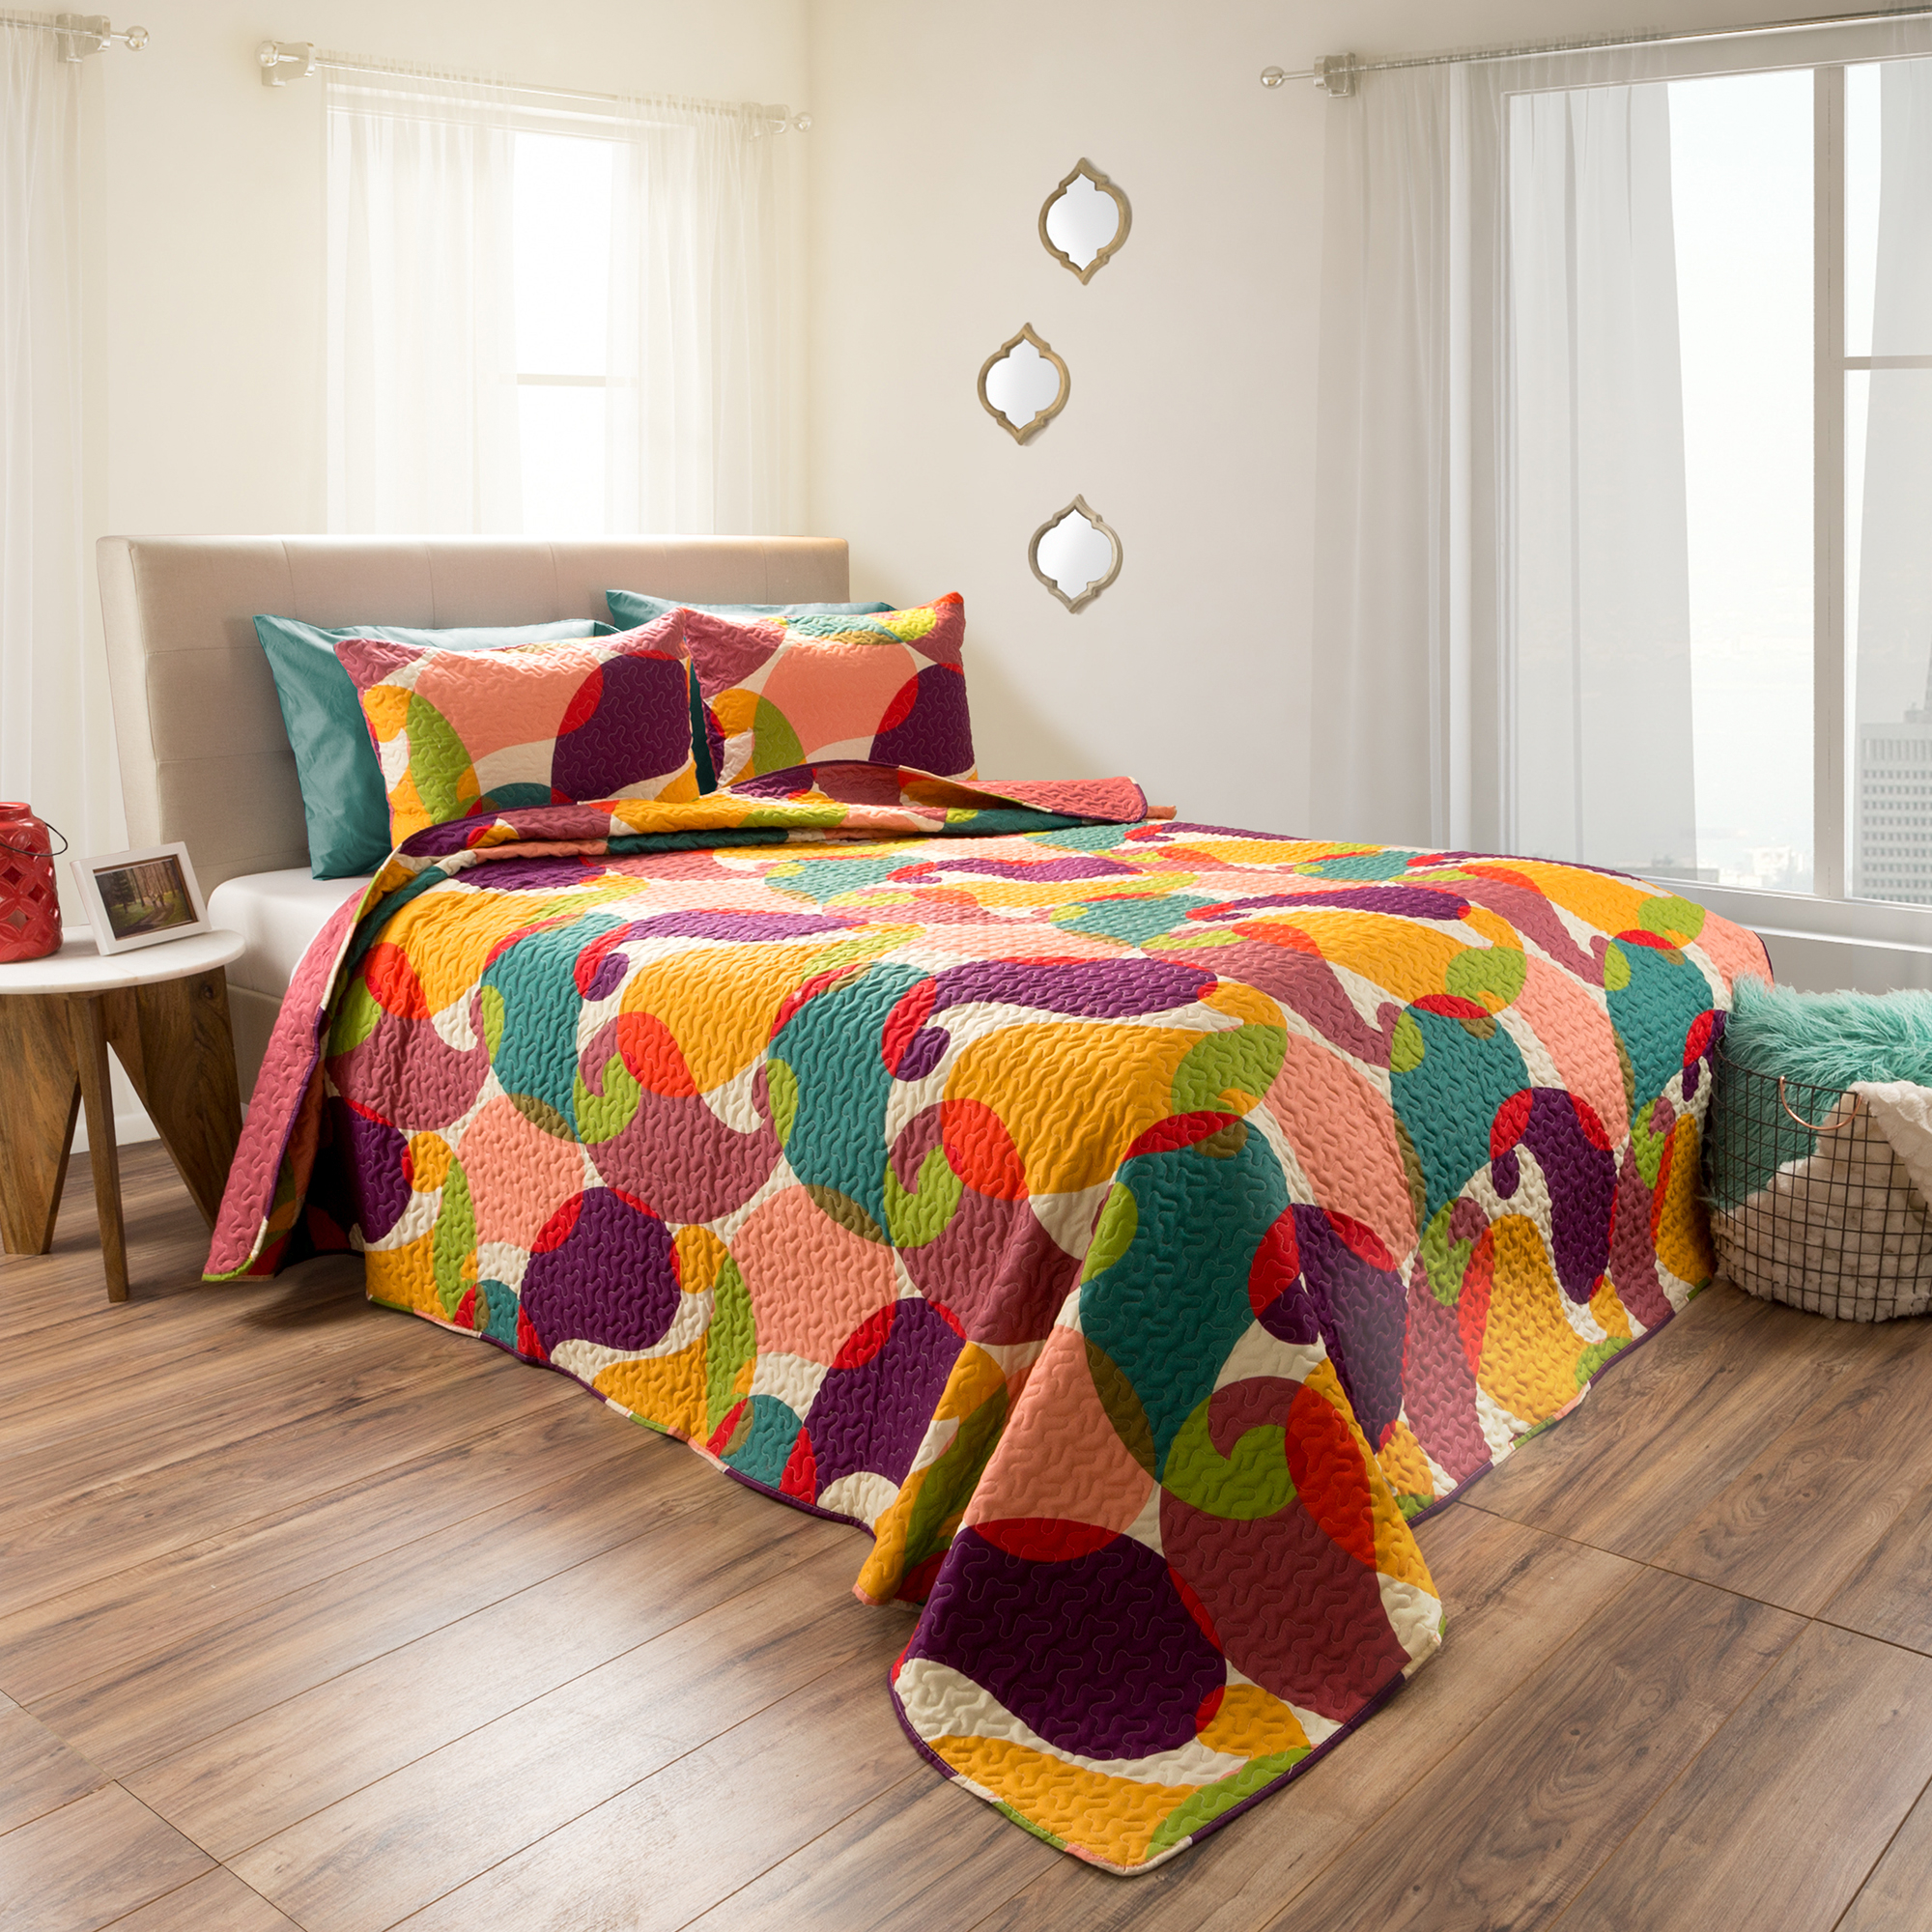 Twin Quilt Bed Set, 2 Piece Reversible Microfiber Quilt Bedding Set With Shams Evelyn Embossed Quilt Bedroom Set By Lavish Home (pink Rose)